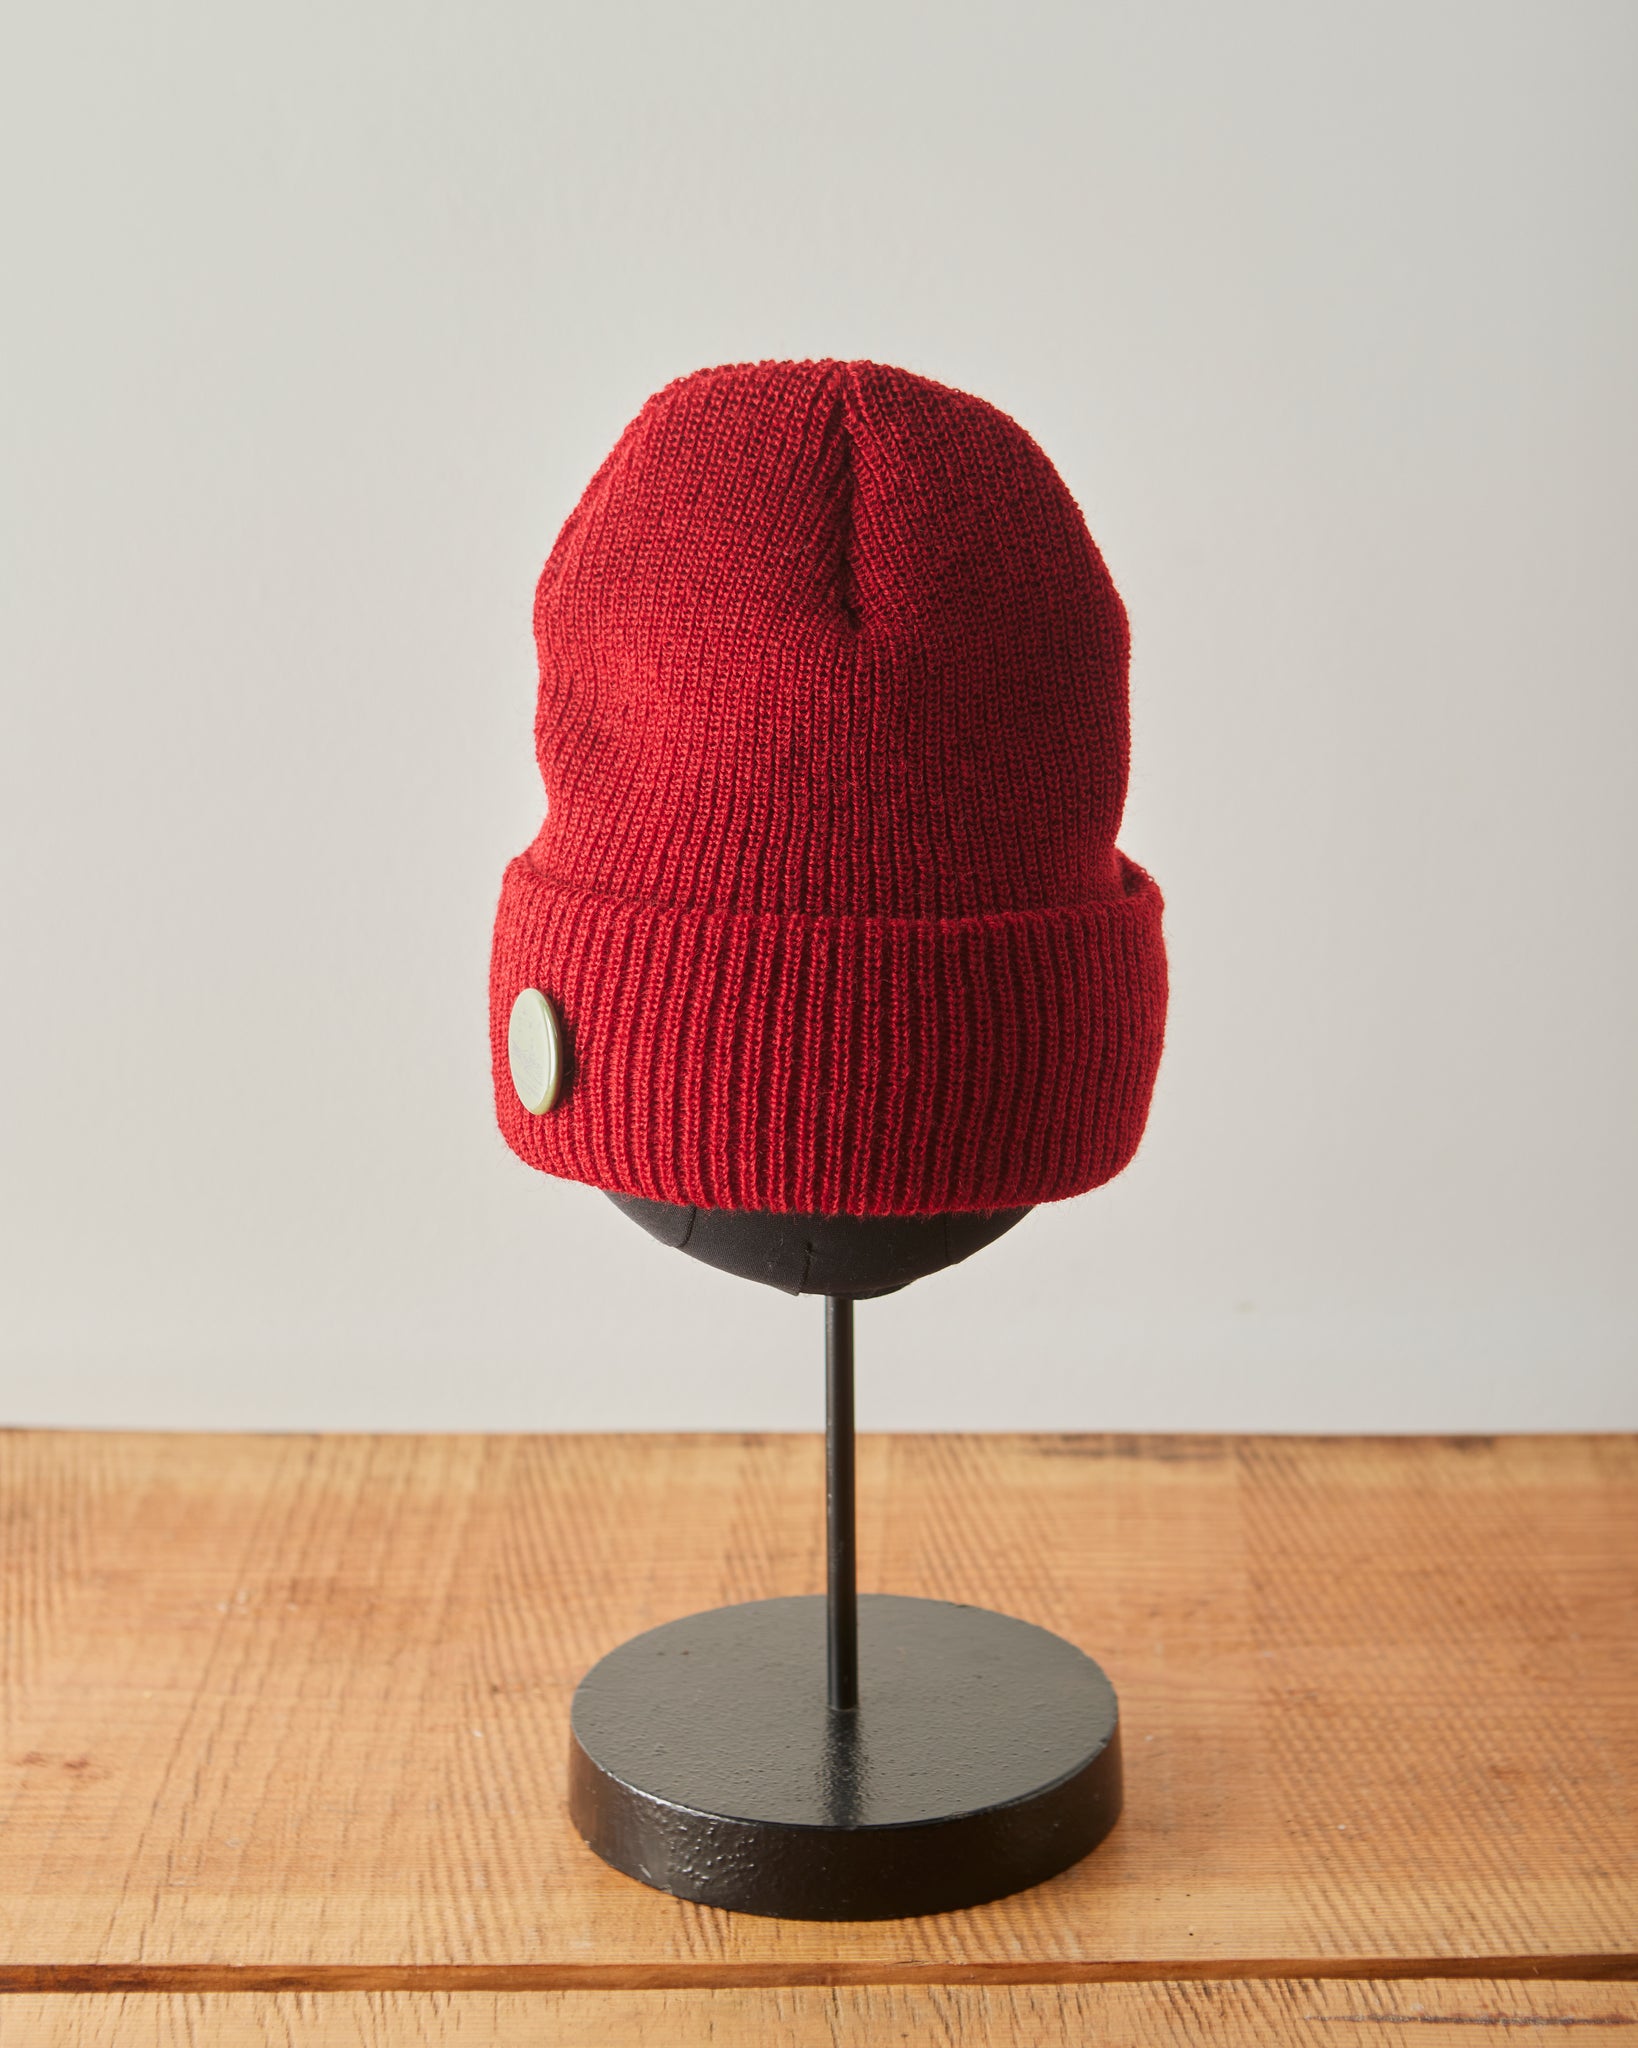 Engineered Garments Wool Watch Cap, Red